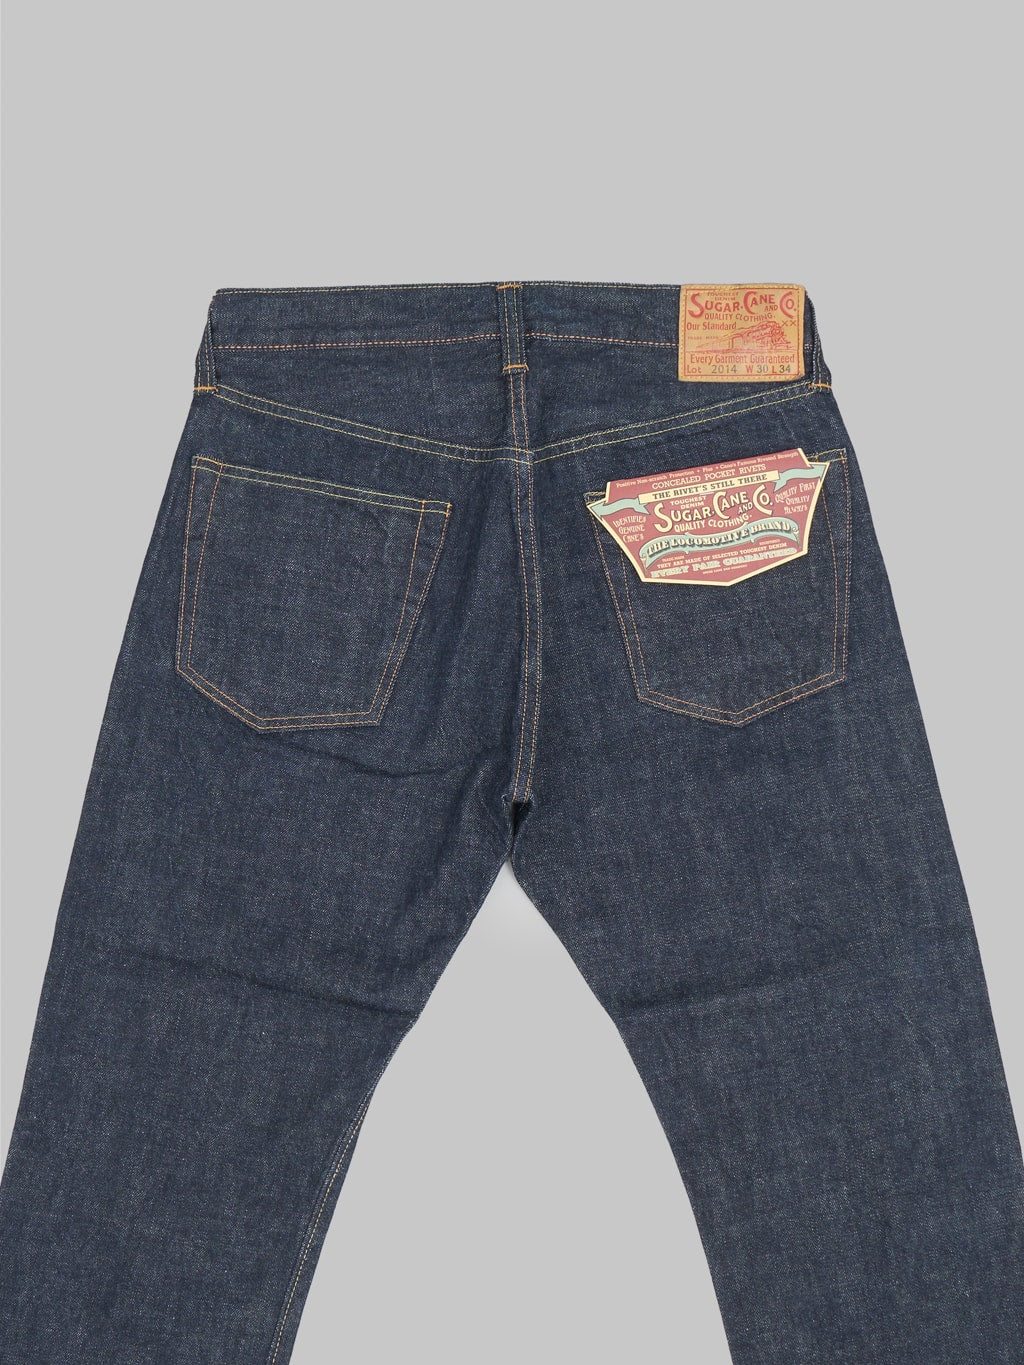 Sugar Cane "1947 Type III" 12oz Slim Jeans